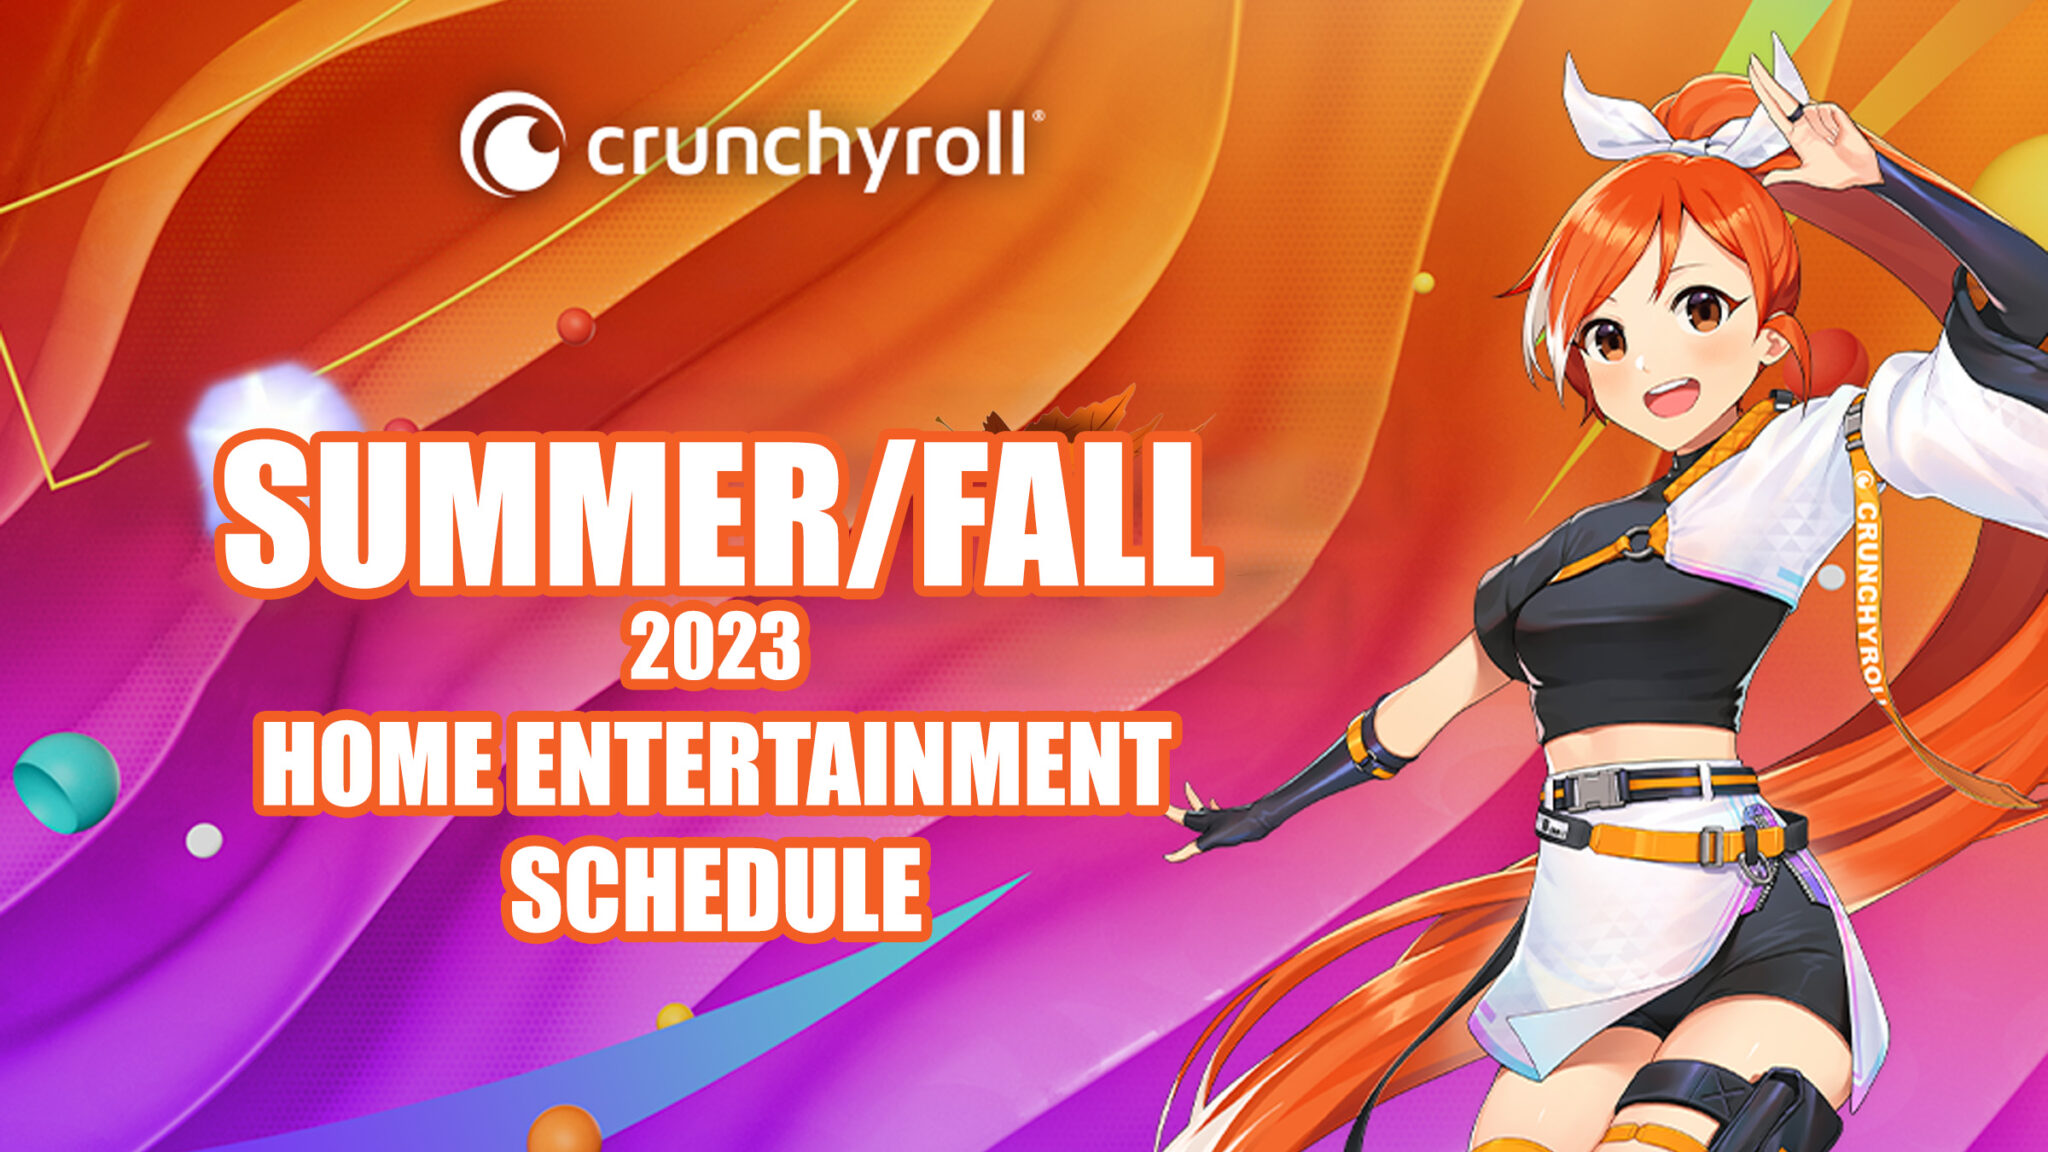 Crunchyroll Home Entertainment Announce Amazing Summer/Fall 2023